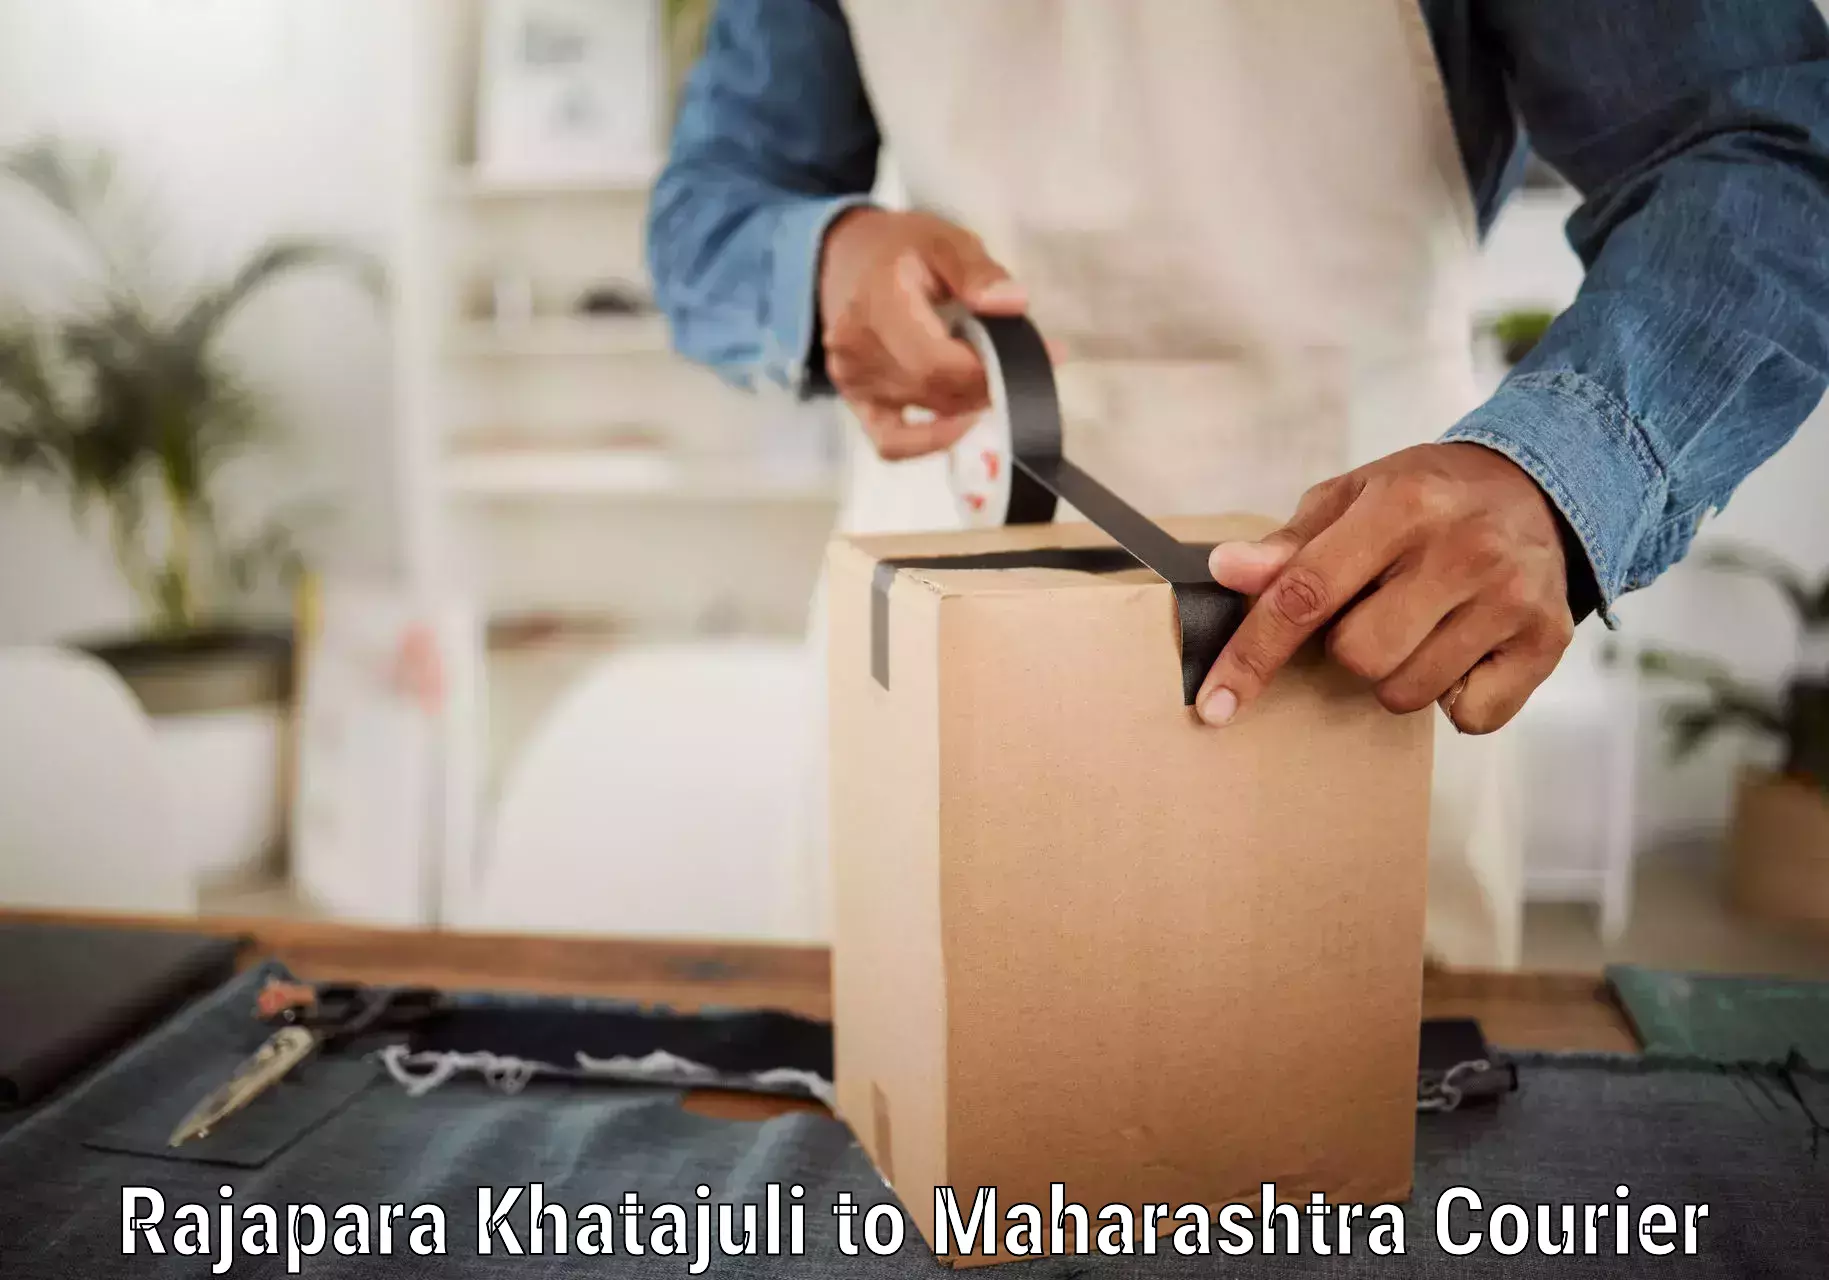 Enhanced tracking features Rajapara Khatajuli to Maharashtra